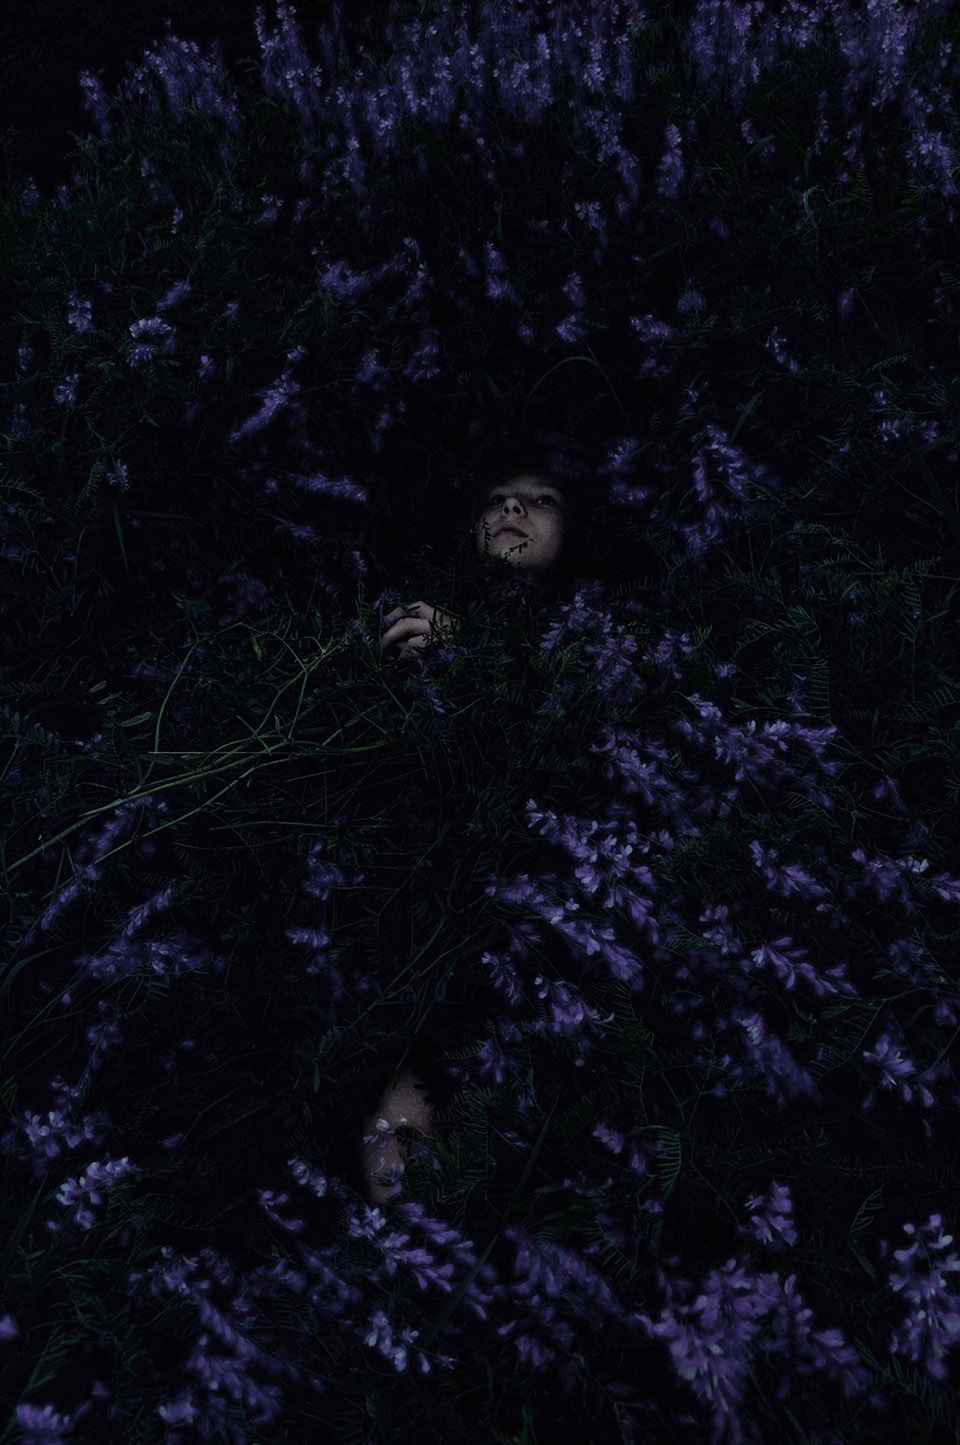 Photo by Yevgenia “Jane” Laptii - a person lying in a field of purple flowers